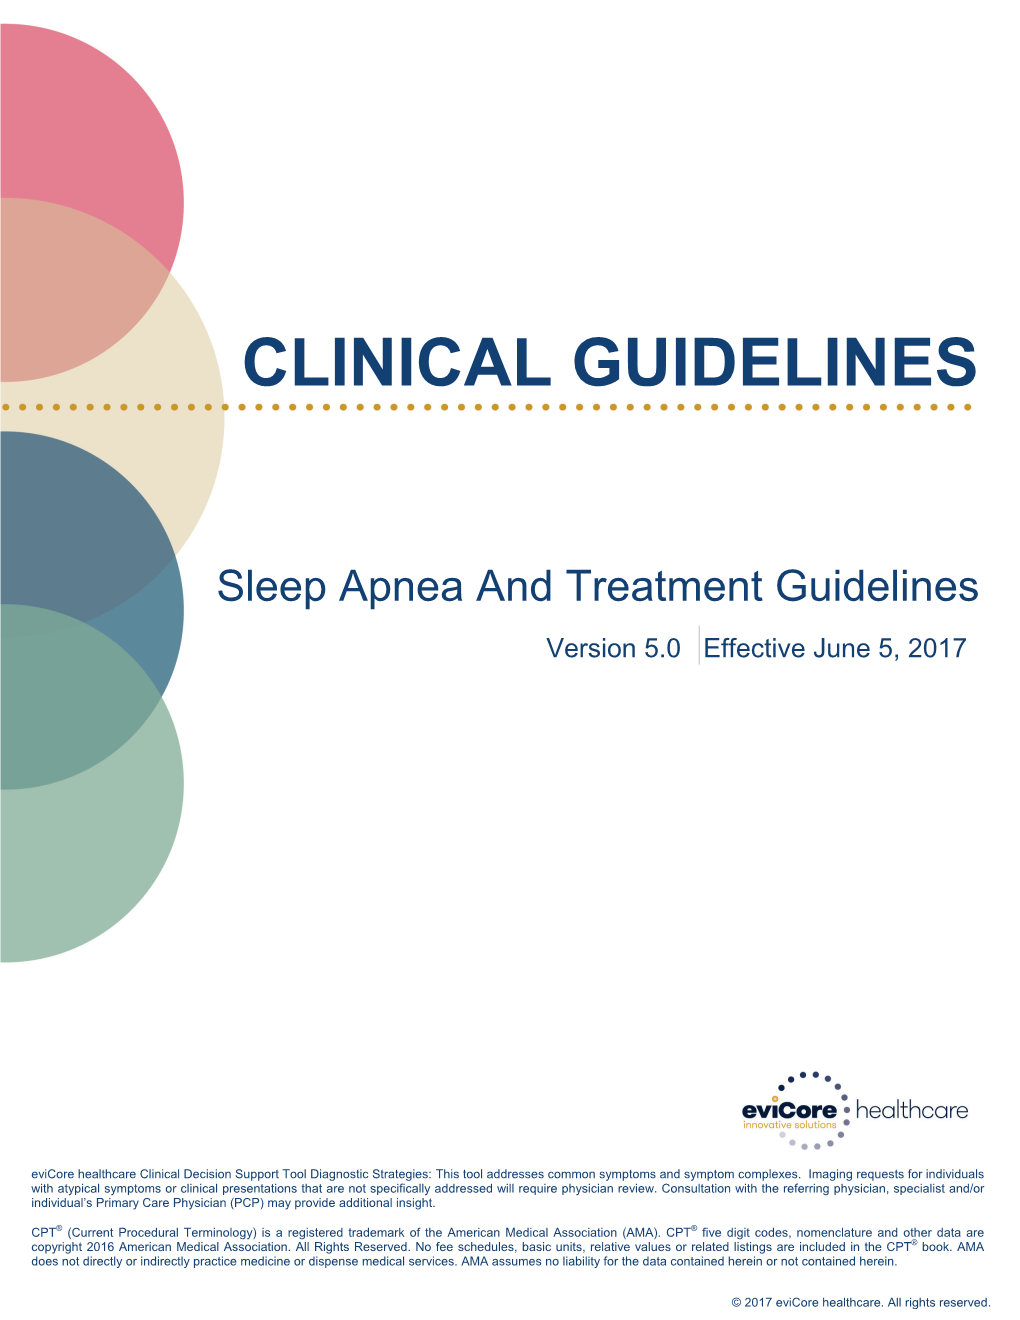 Sleep Apnea and Treatment Guidelines Version 5.0 Effective June 5, 2017